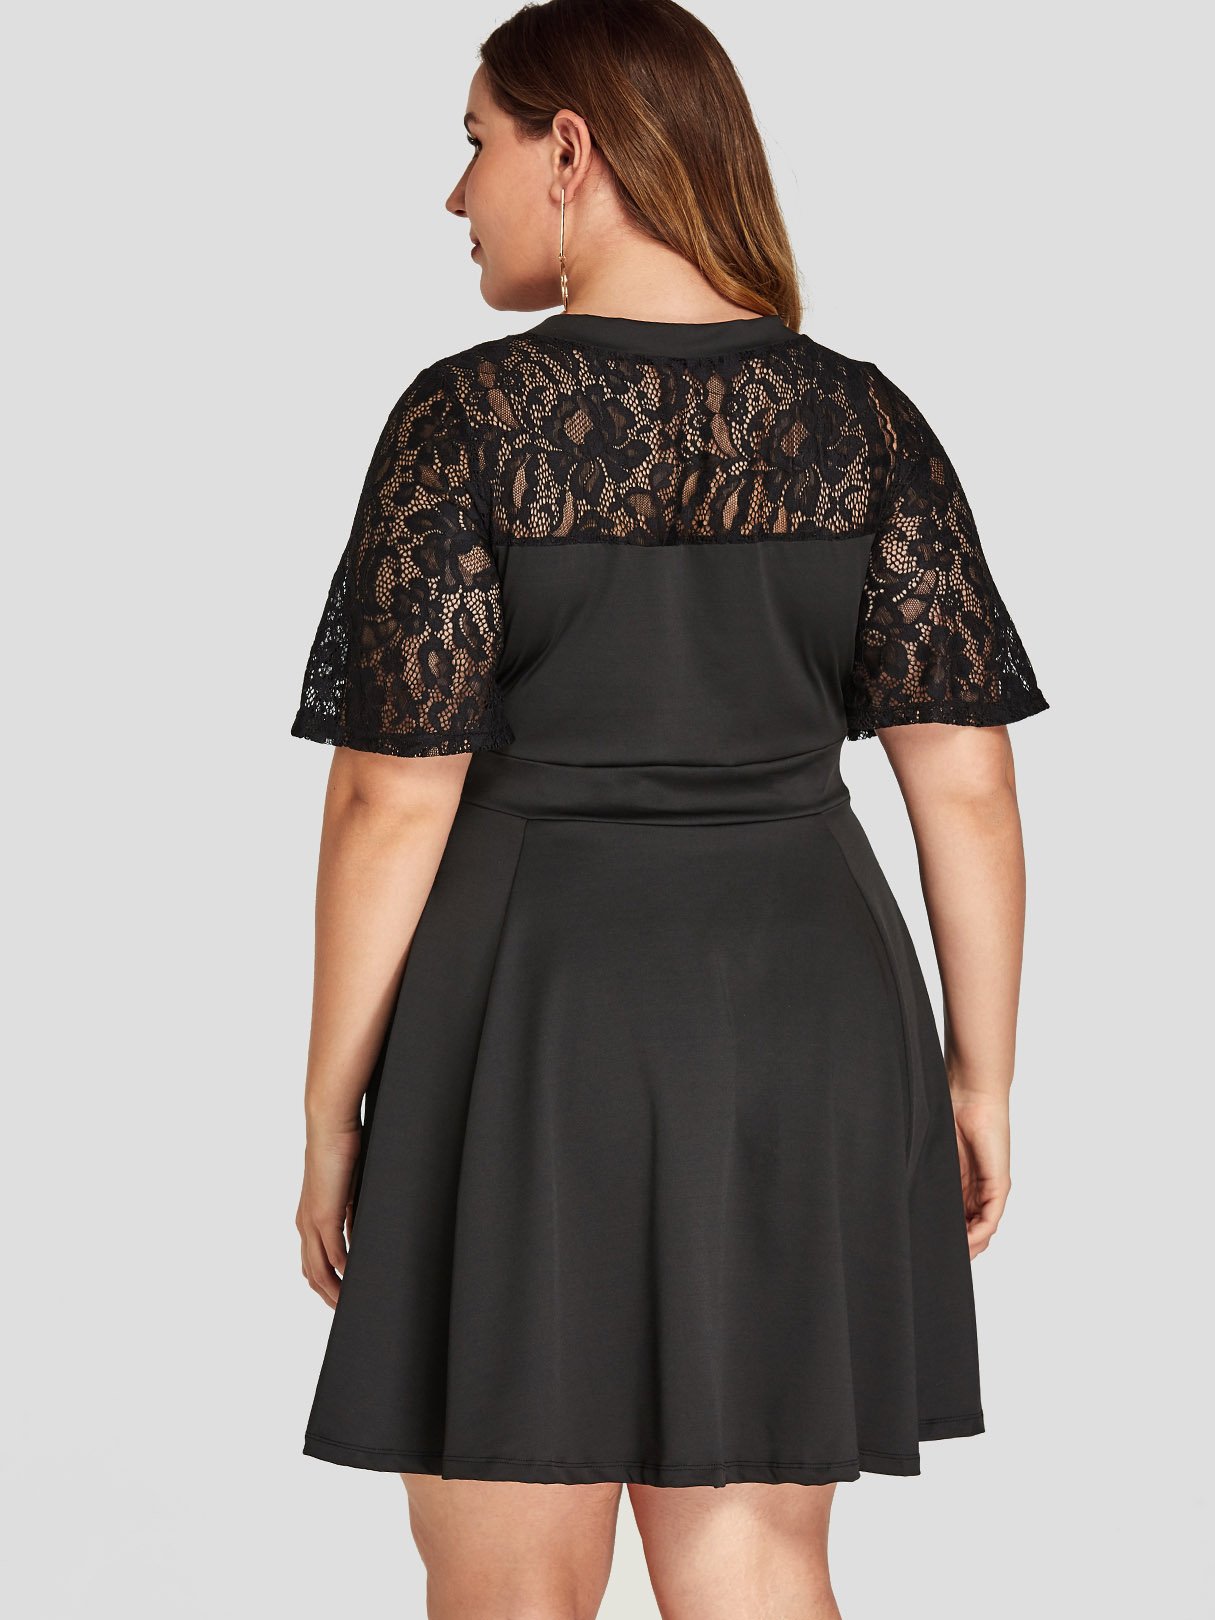 NEW FEELING Womens Black Plus Size Dresses